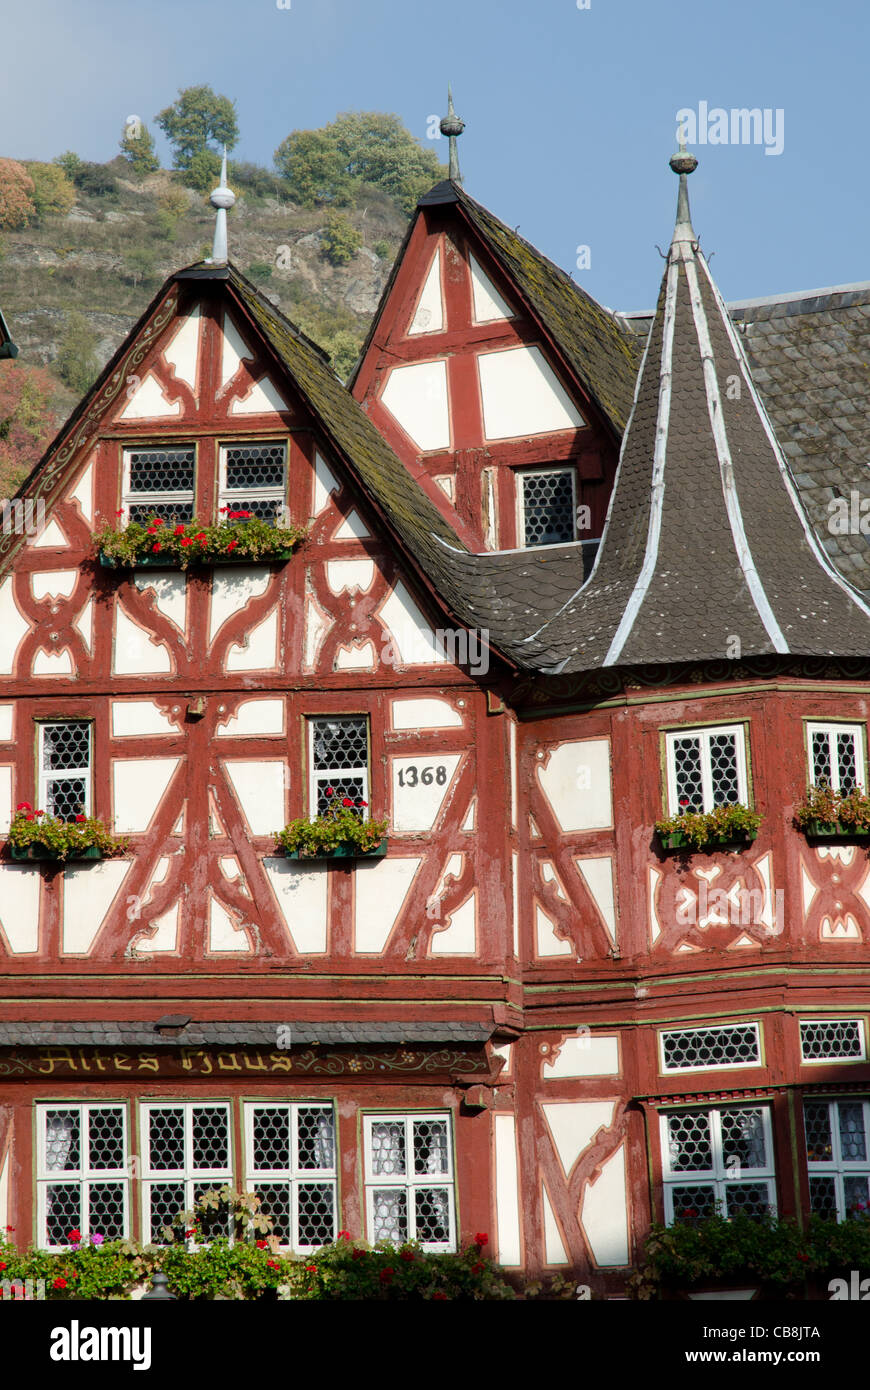 Half-timbered Fachwerk house in Bacharach, Rhineland, Germany Stock Photo